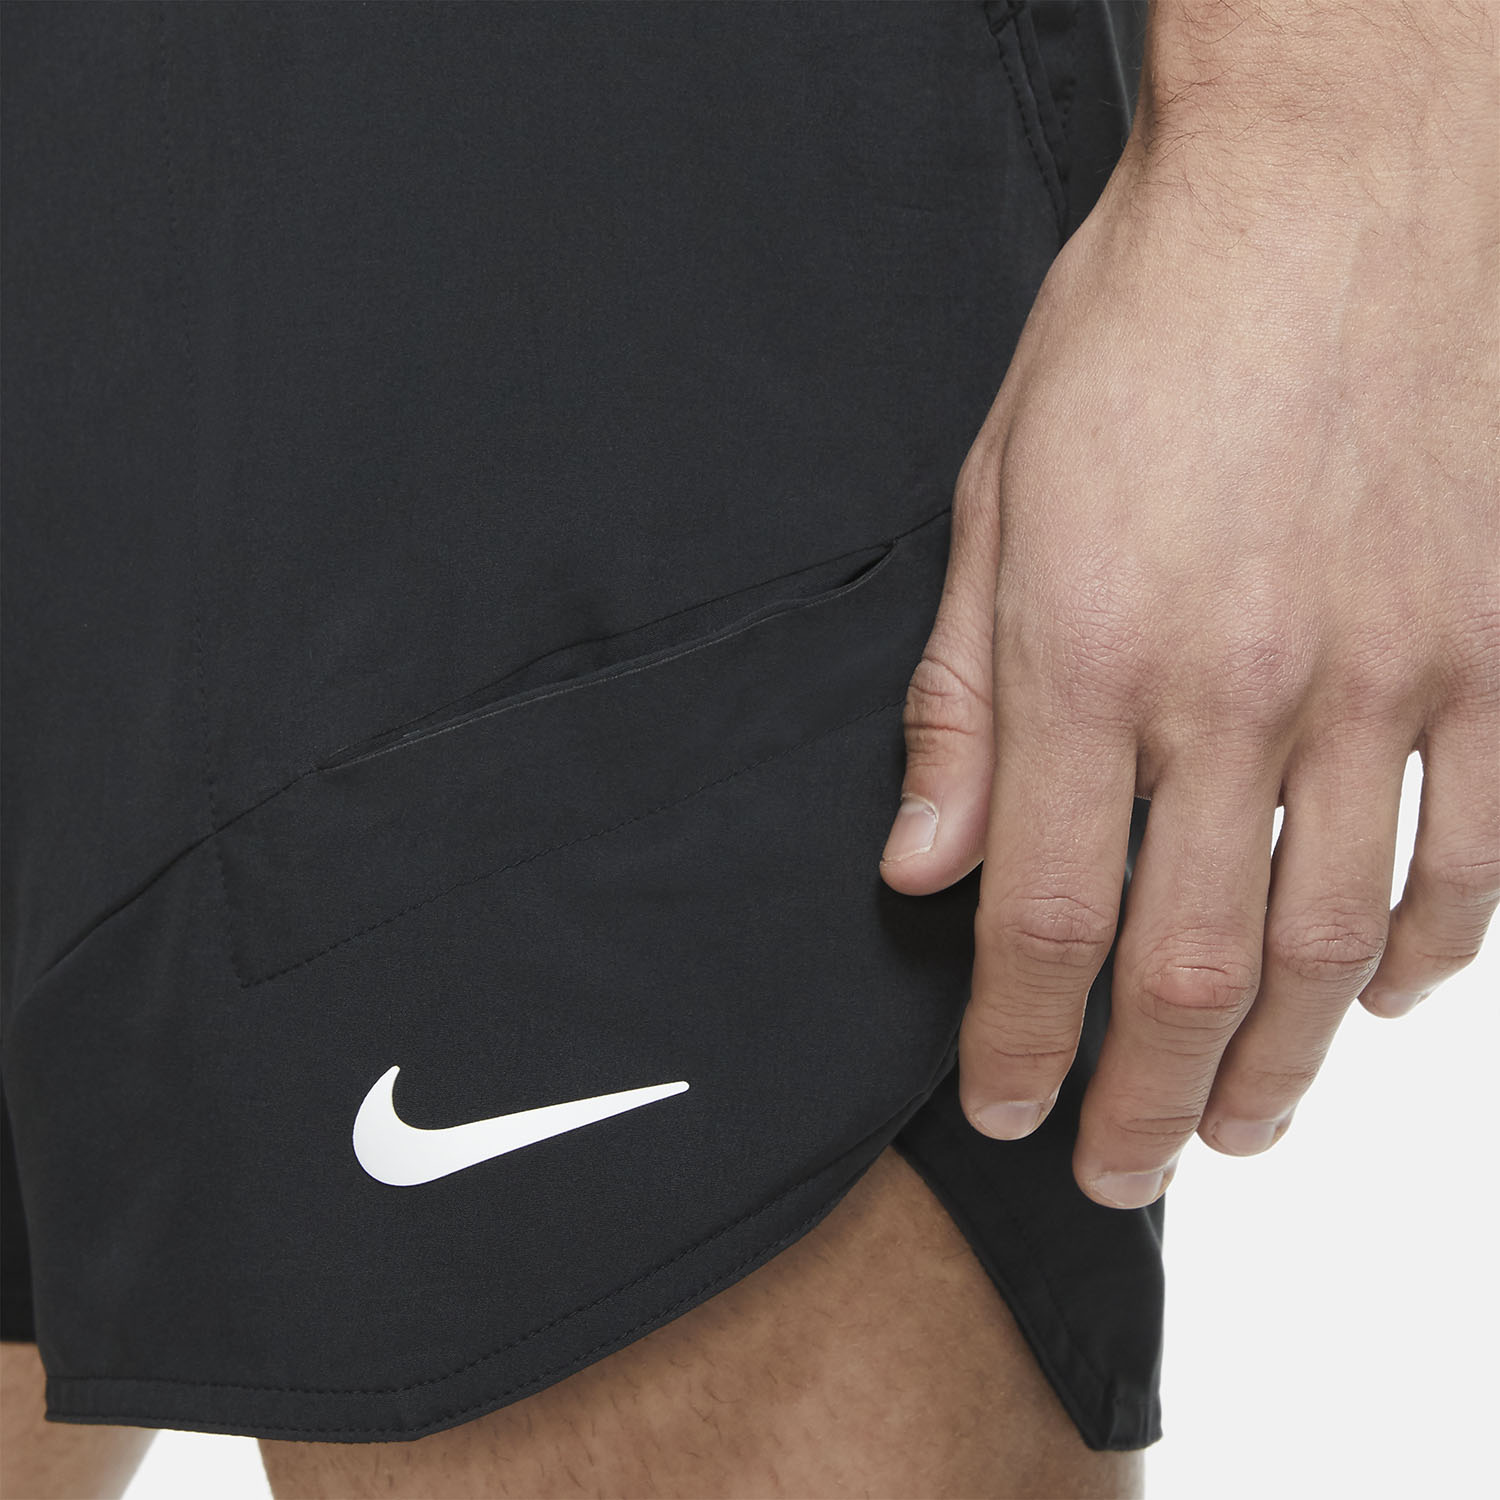 Nike Dri-FIT Advantage 7in Shorts - Black/White